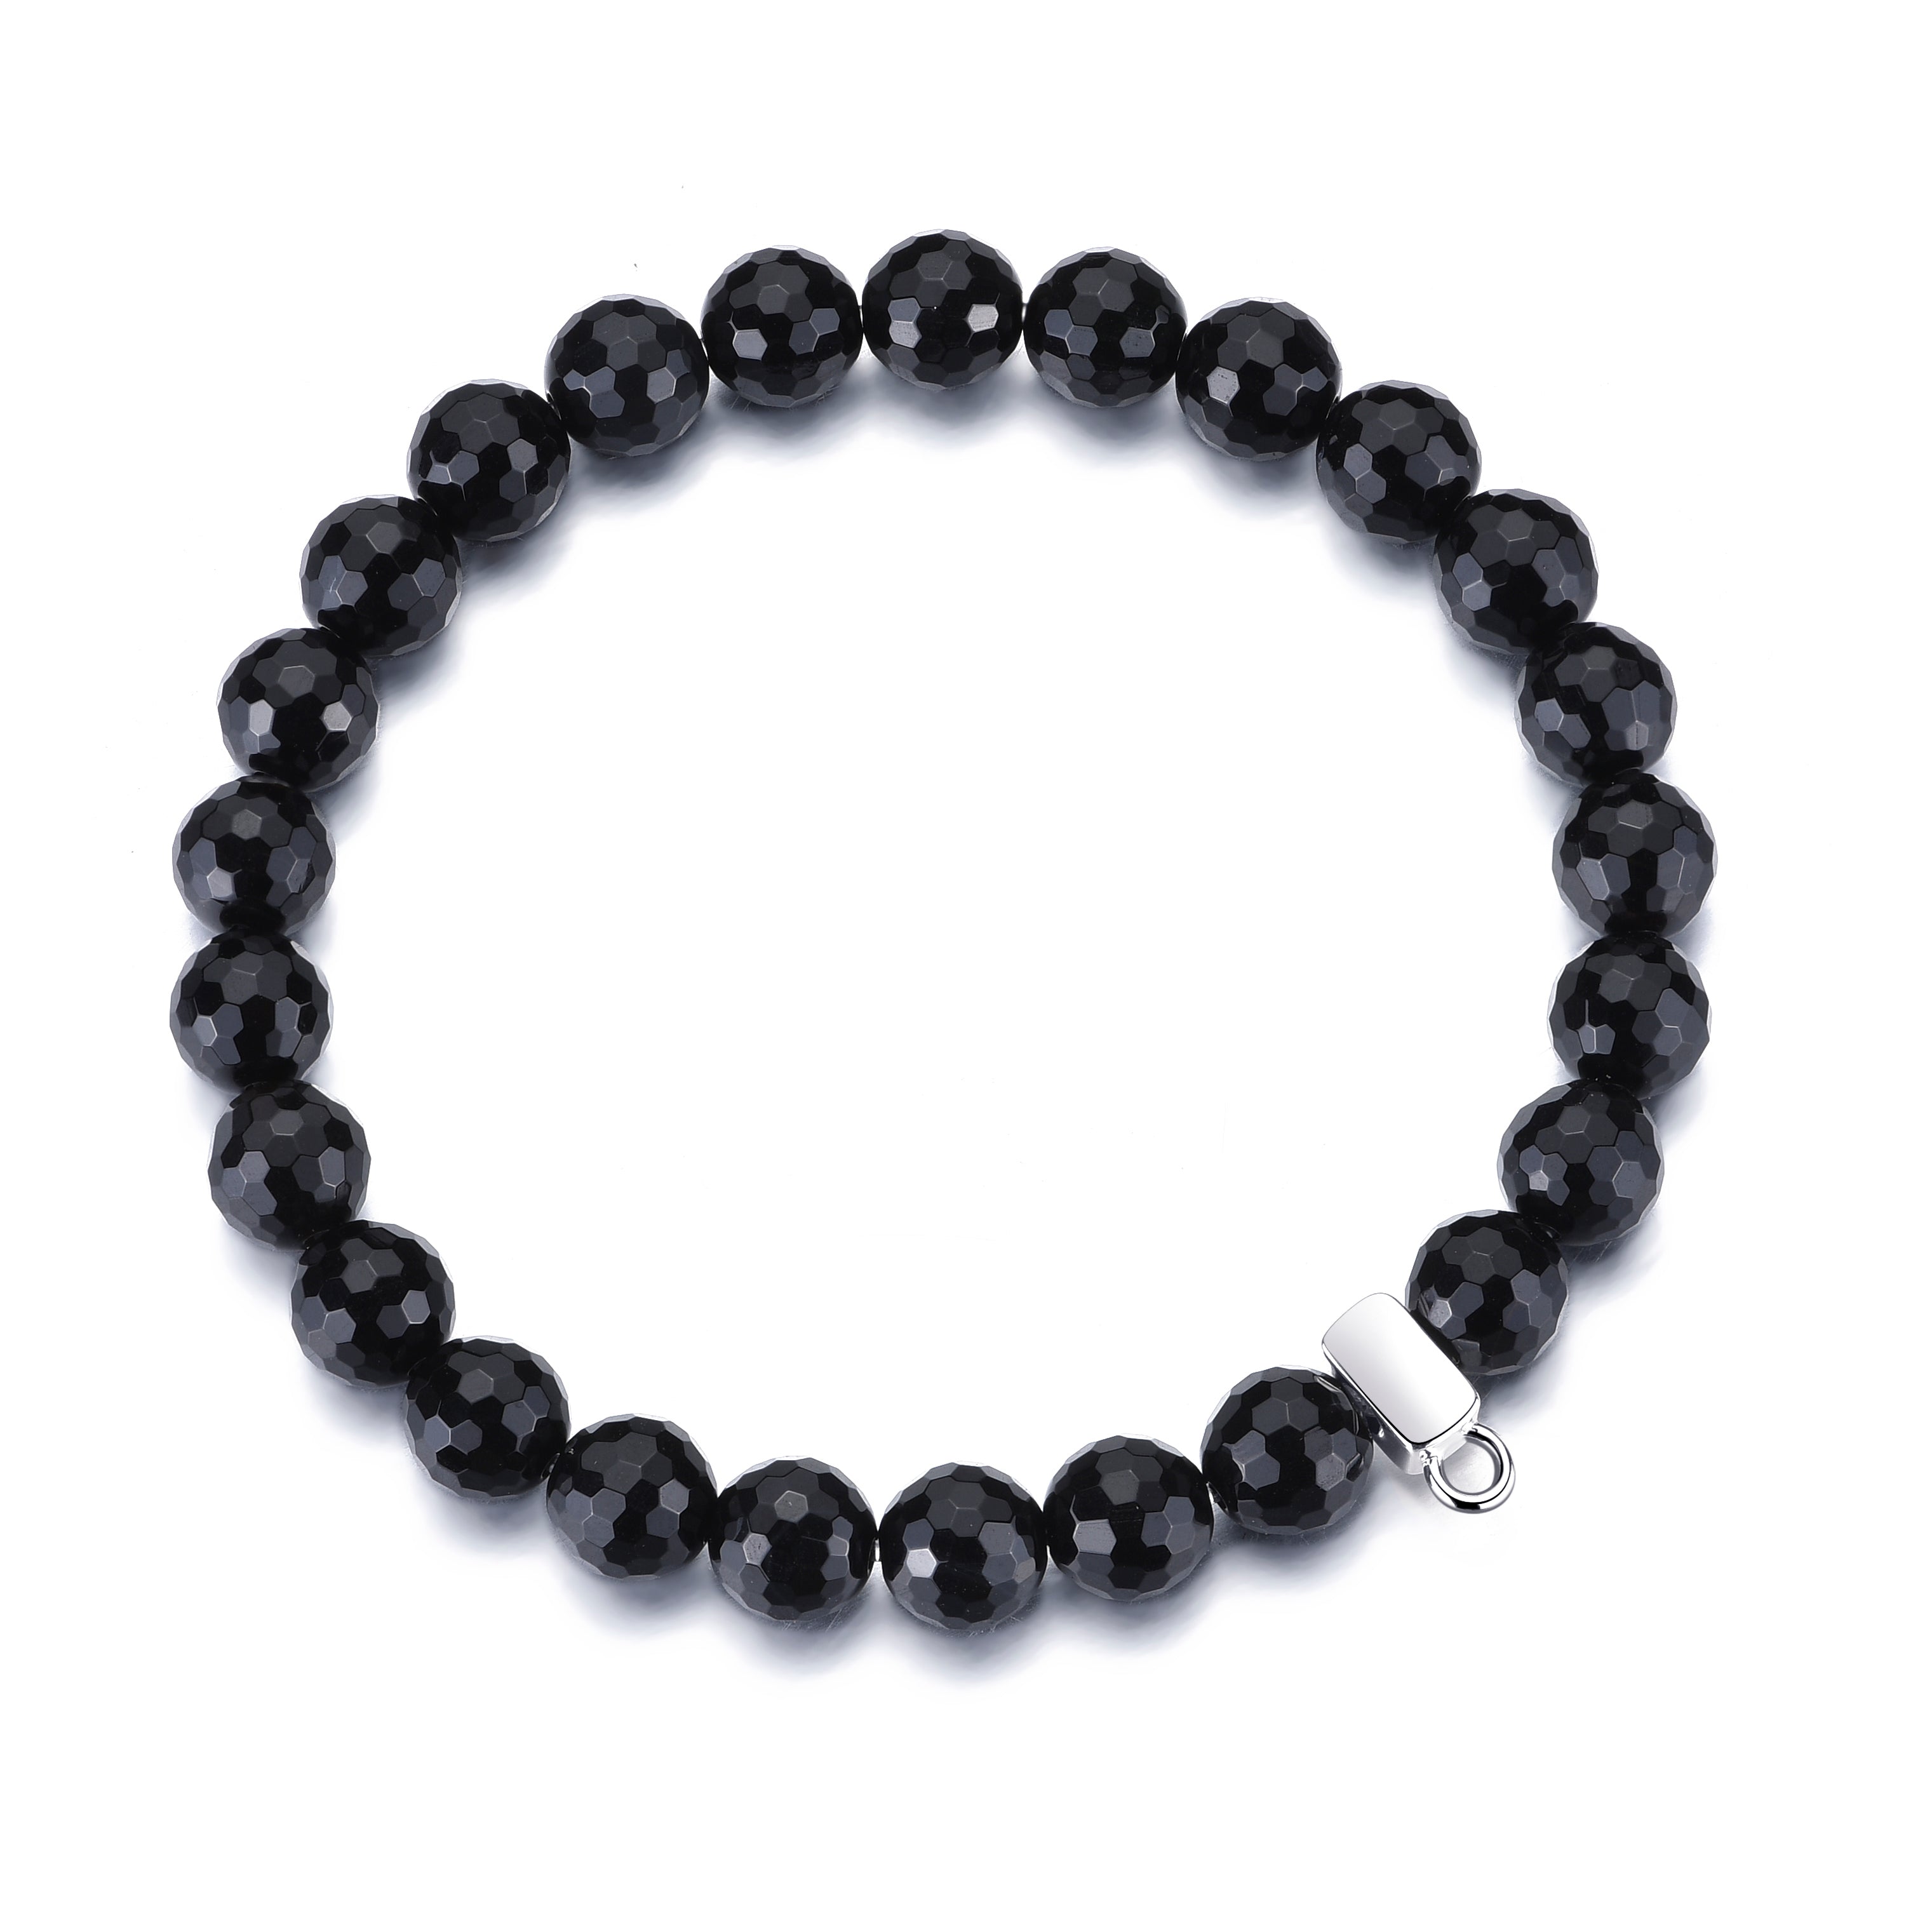 Faceted Black Onyx Gemstone Charm Stretch Bracelet by Philip Jones Jewellery